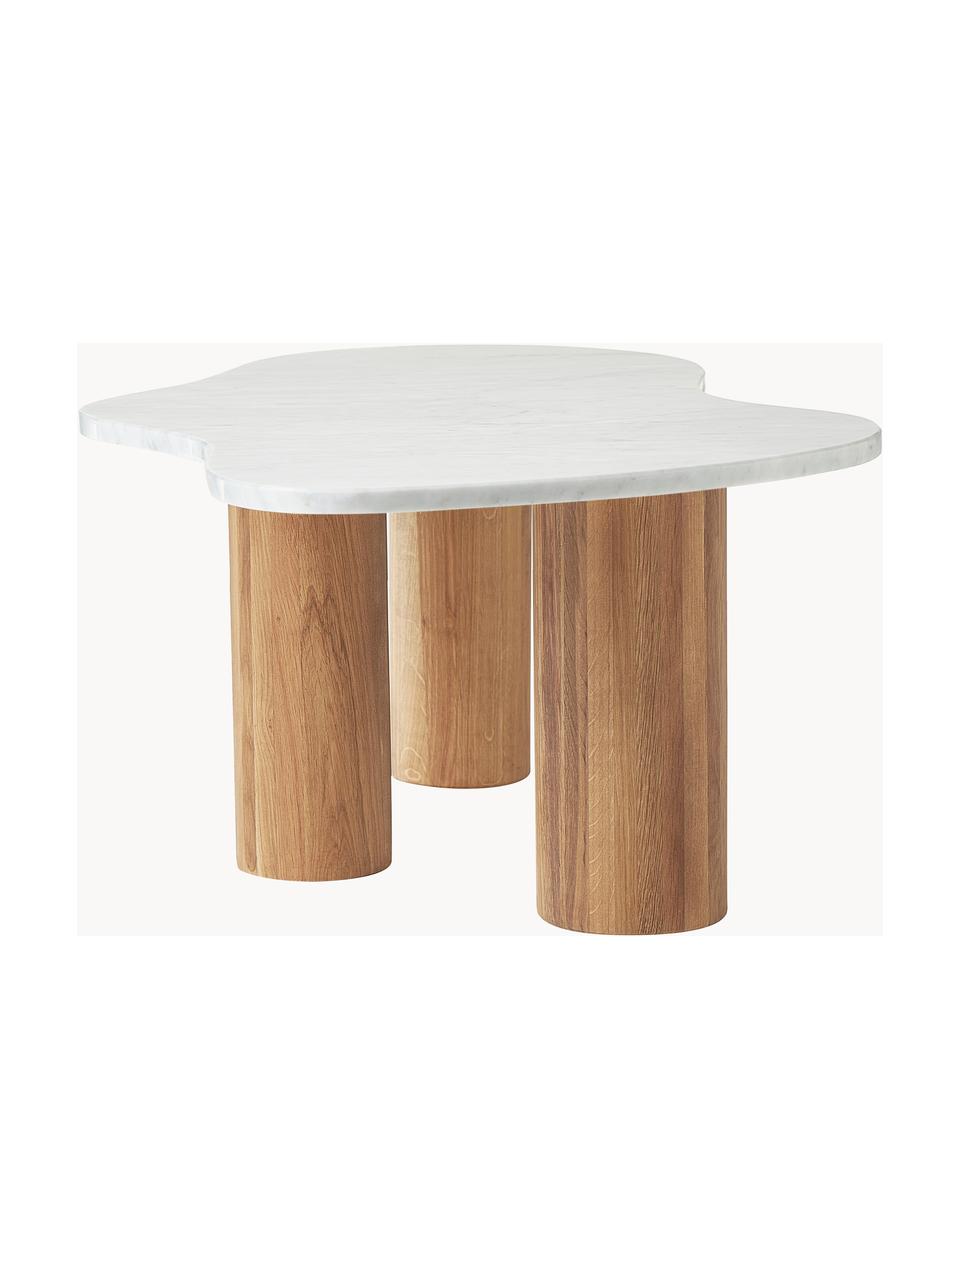 Marmeren salontafel Naruto in organische vorm, Tafelblad: marmer, Poten: eikenhout, Eikenhout, wit, gemarmerd, B 90 x D 59 cm